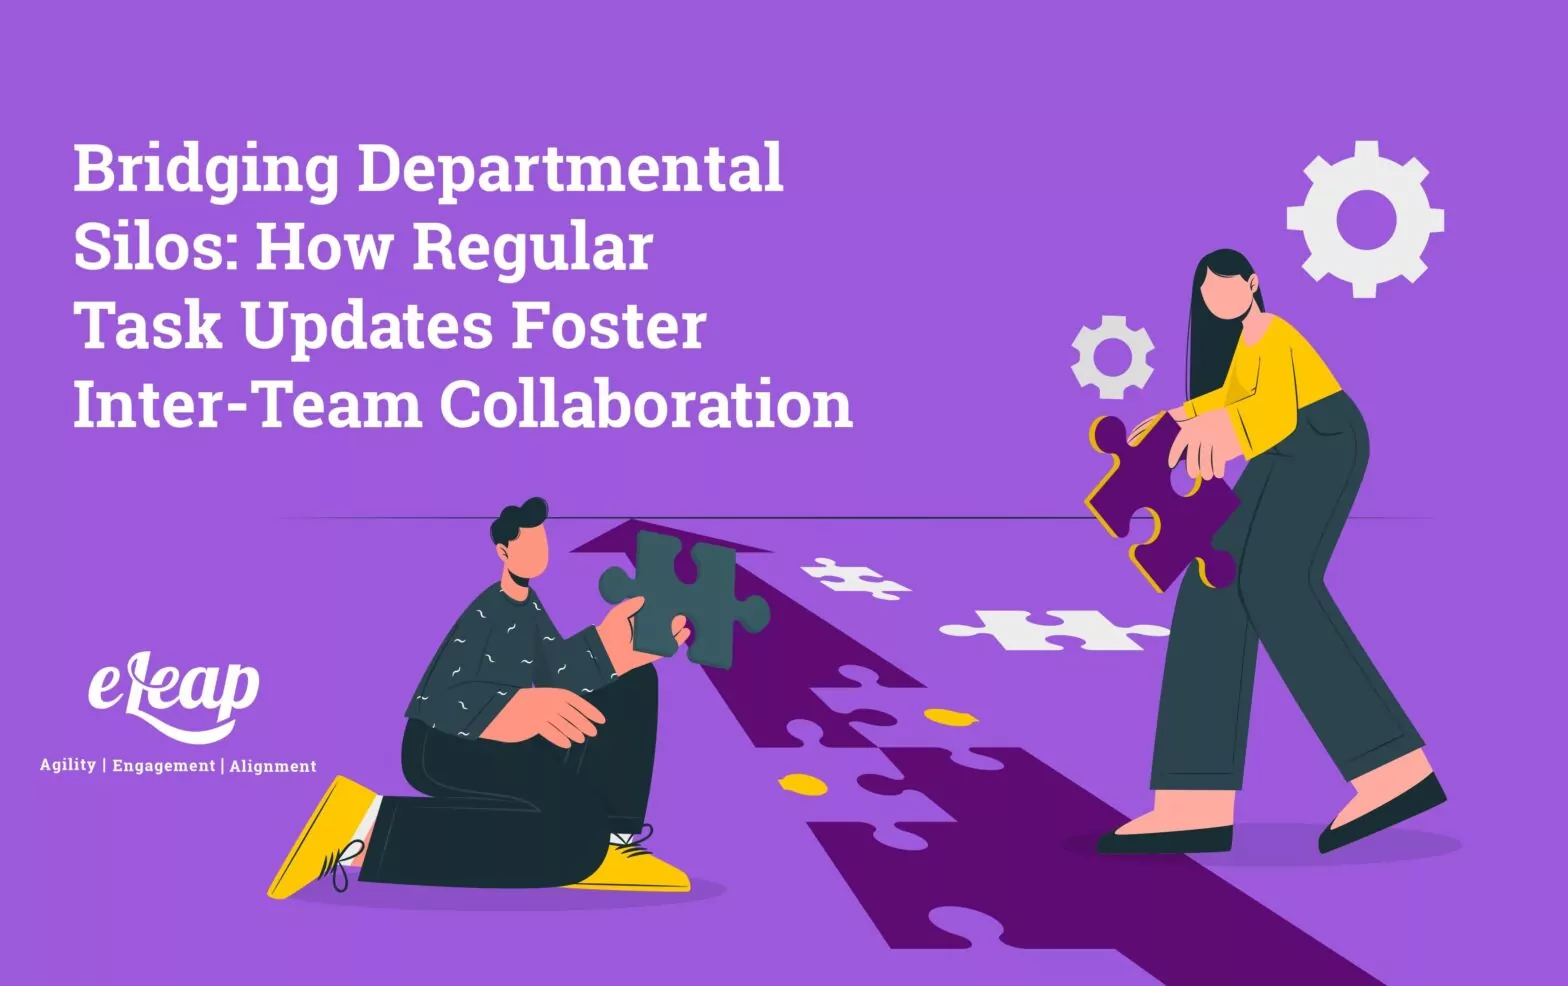 Bridging Departmental Silos: How Regular Task Updates Foster Inter-Team Collaboration